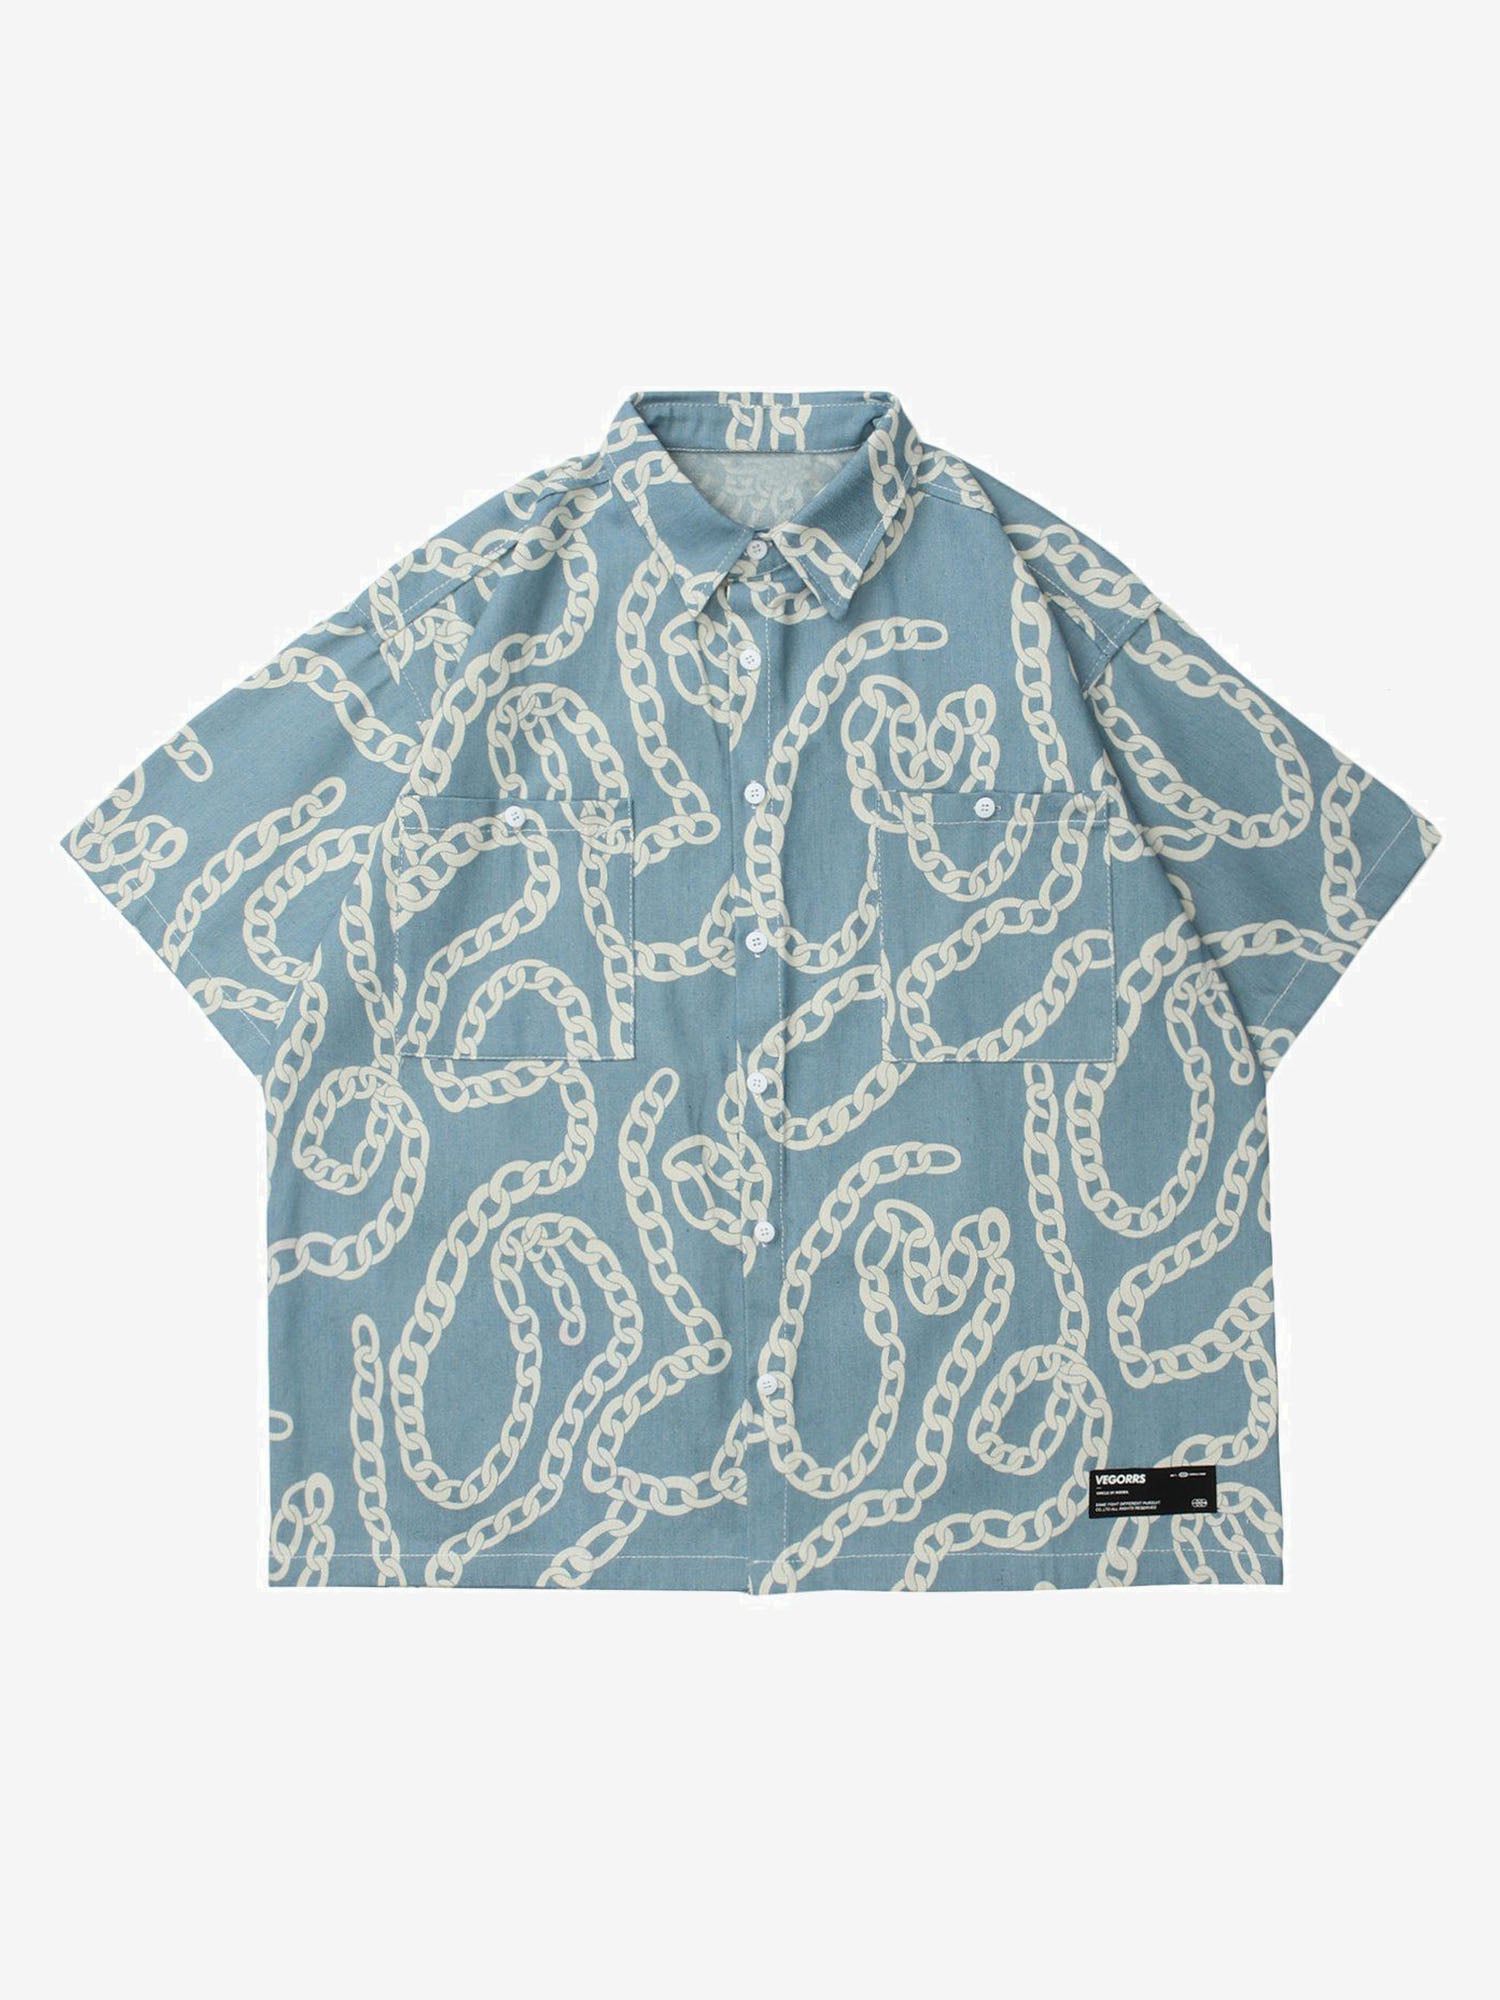 JUSTNOTAG Chain Pattern Full Print Short Sleeve Shirt